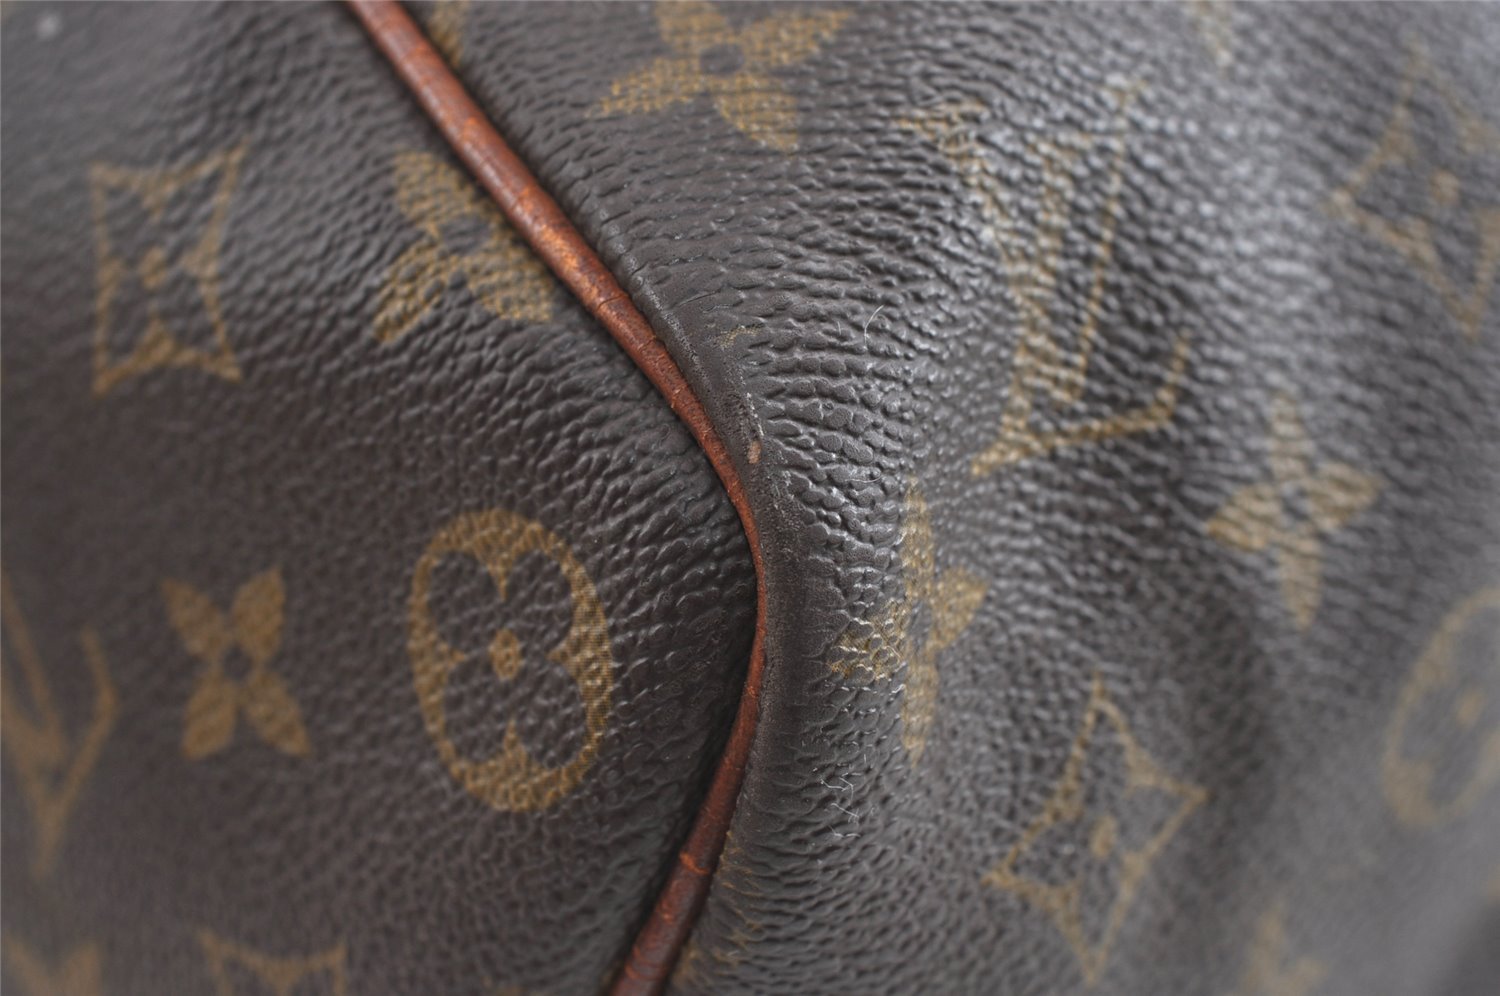 Authentic Louis Vuitton Monogram Keepall 45 Travel Boston Bag M41428 LV 7667J